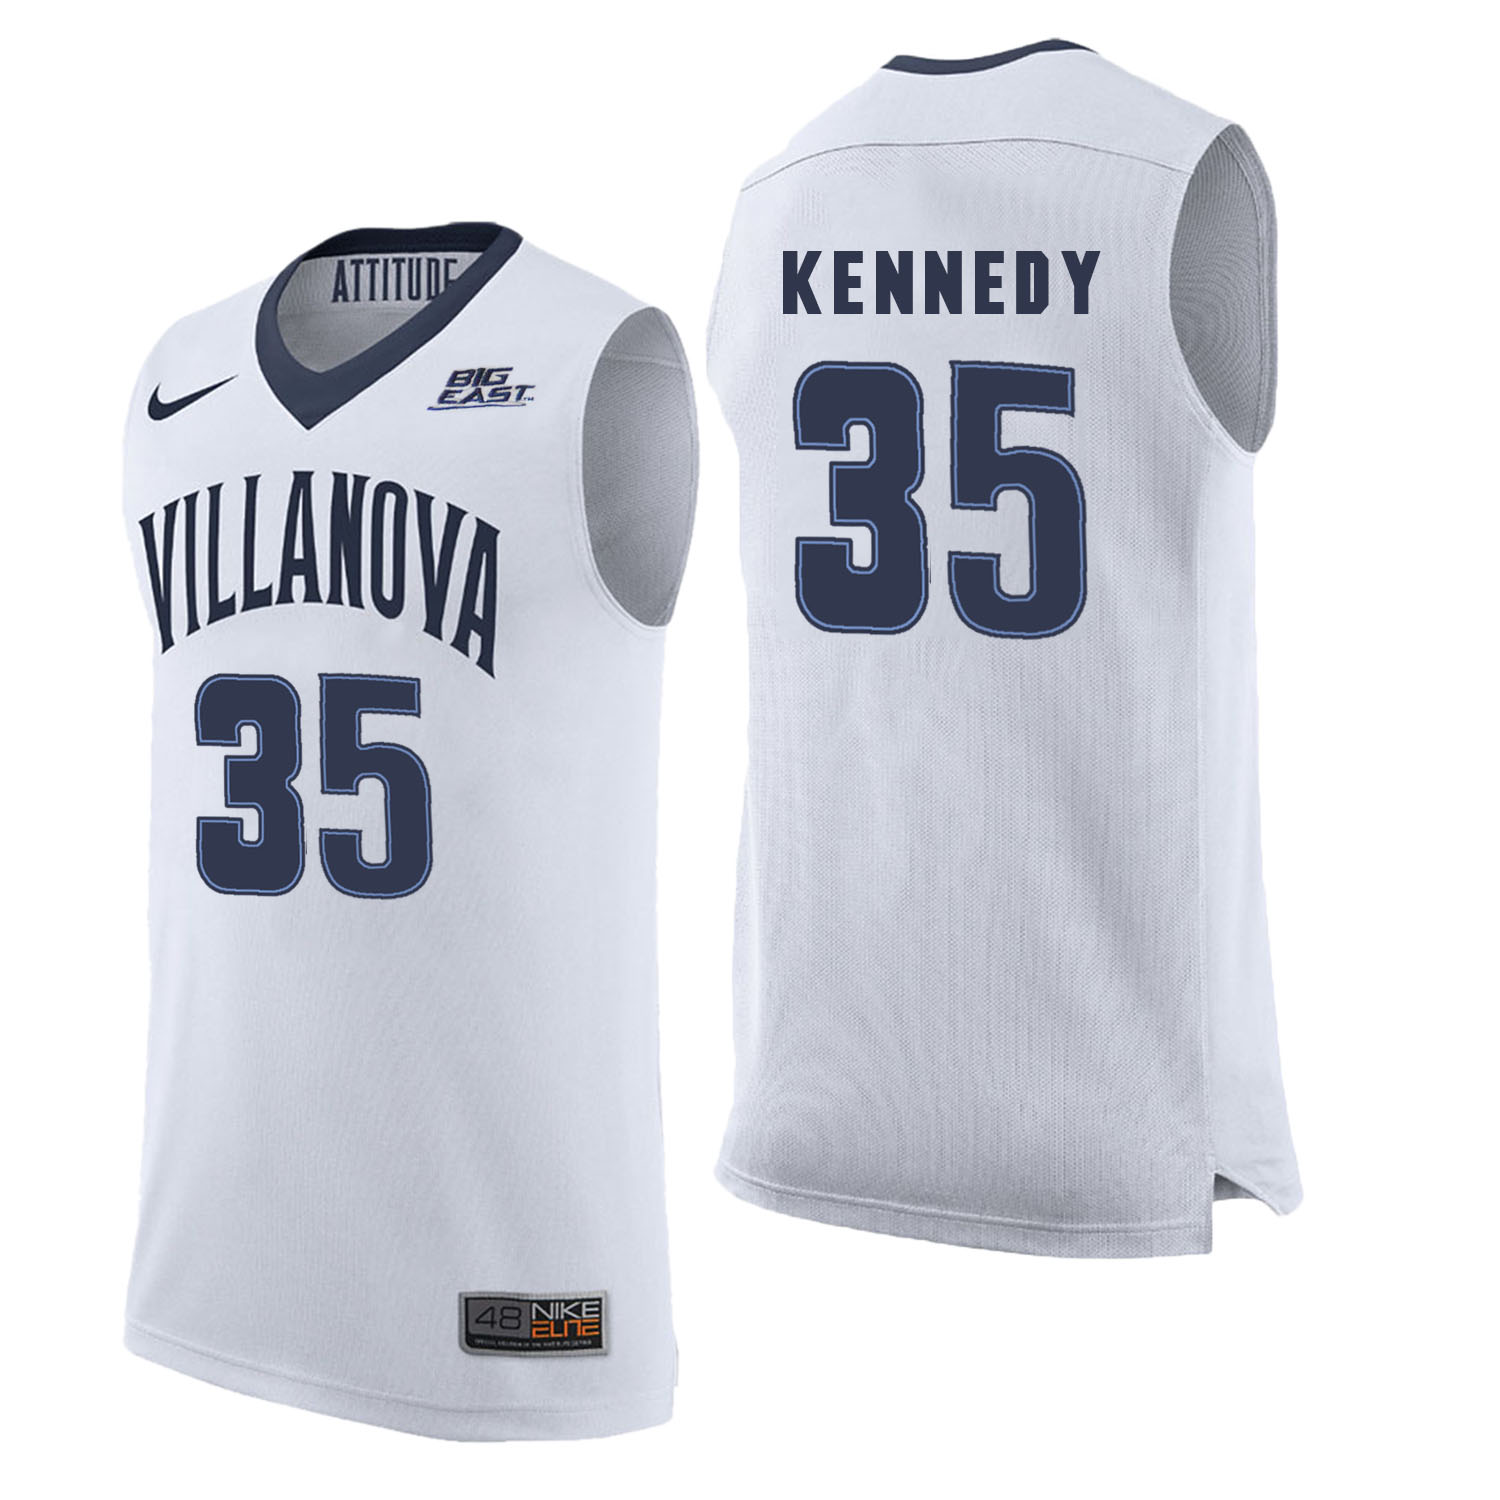 Villanova Wildcats 35 Matt Kennedy White College Basketball Elite Jersey